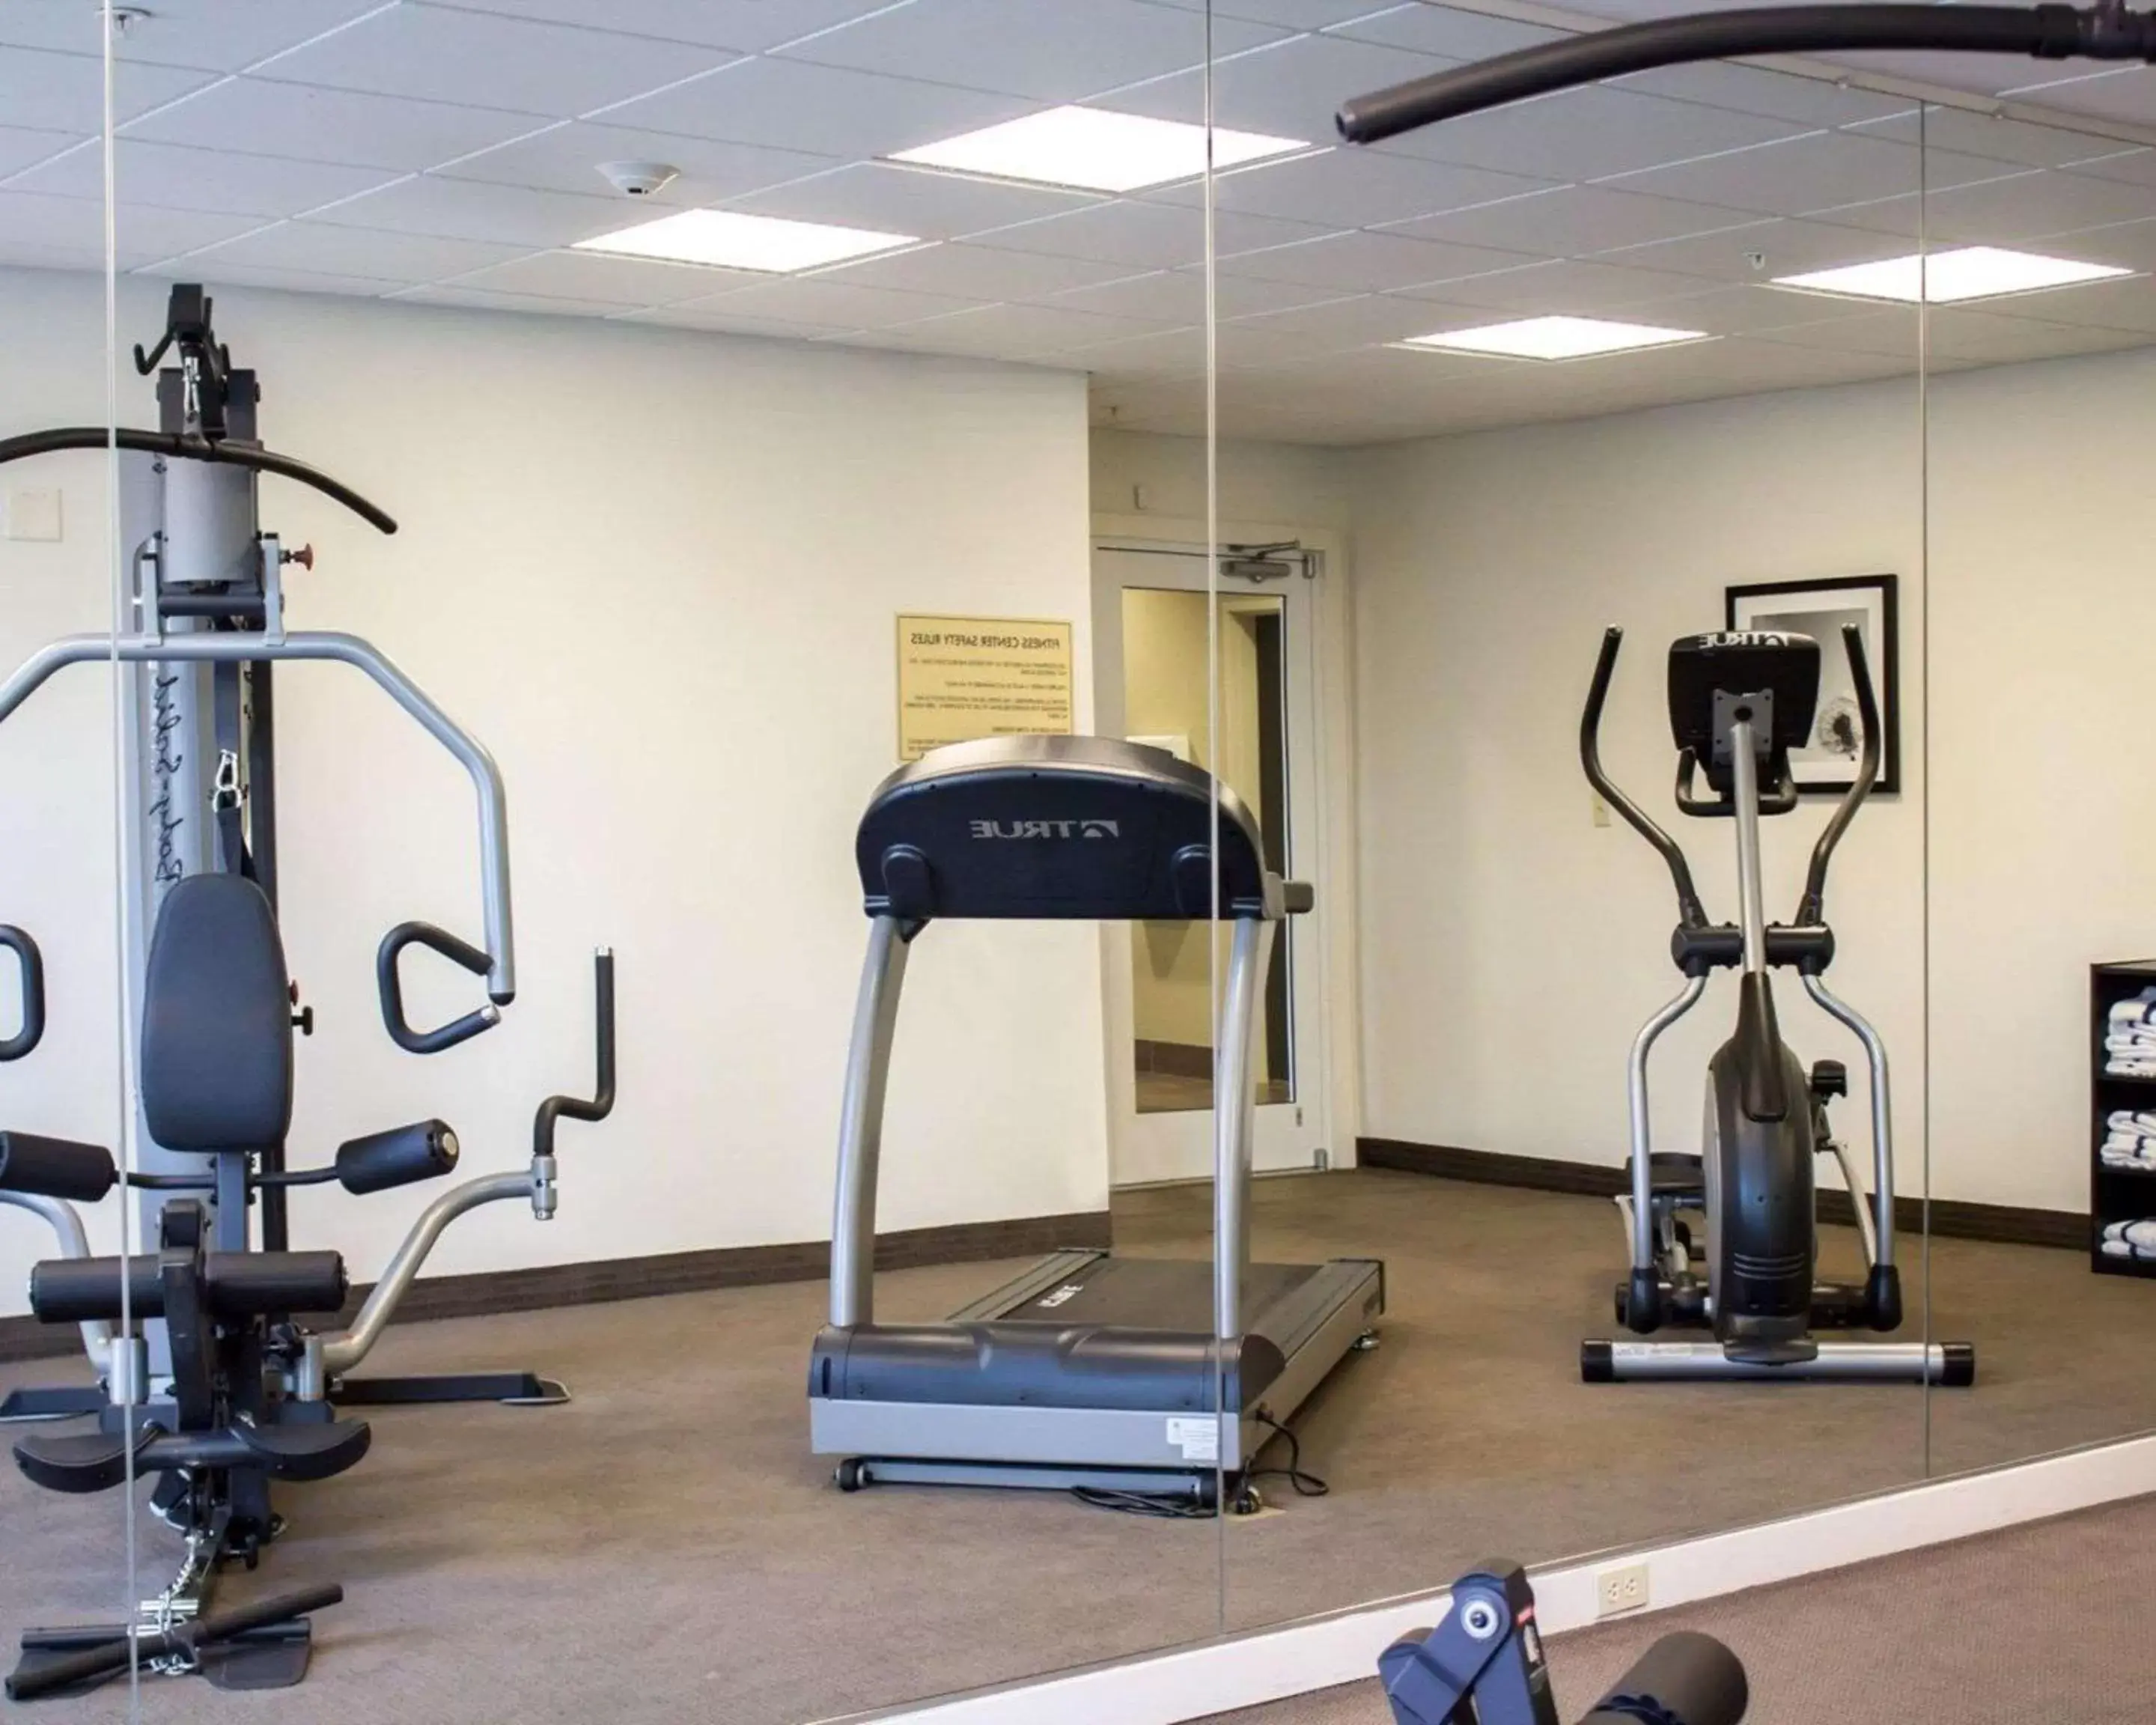 Fitness centre/facilities, Fitness Center/Facilities in Sleep Inn & Suites Moundsville